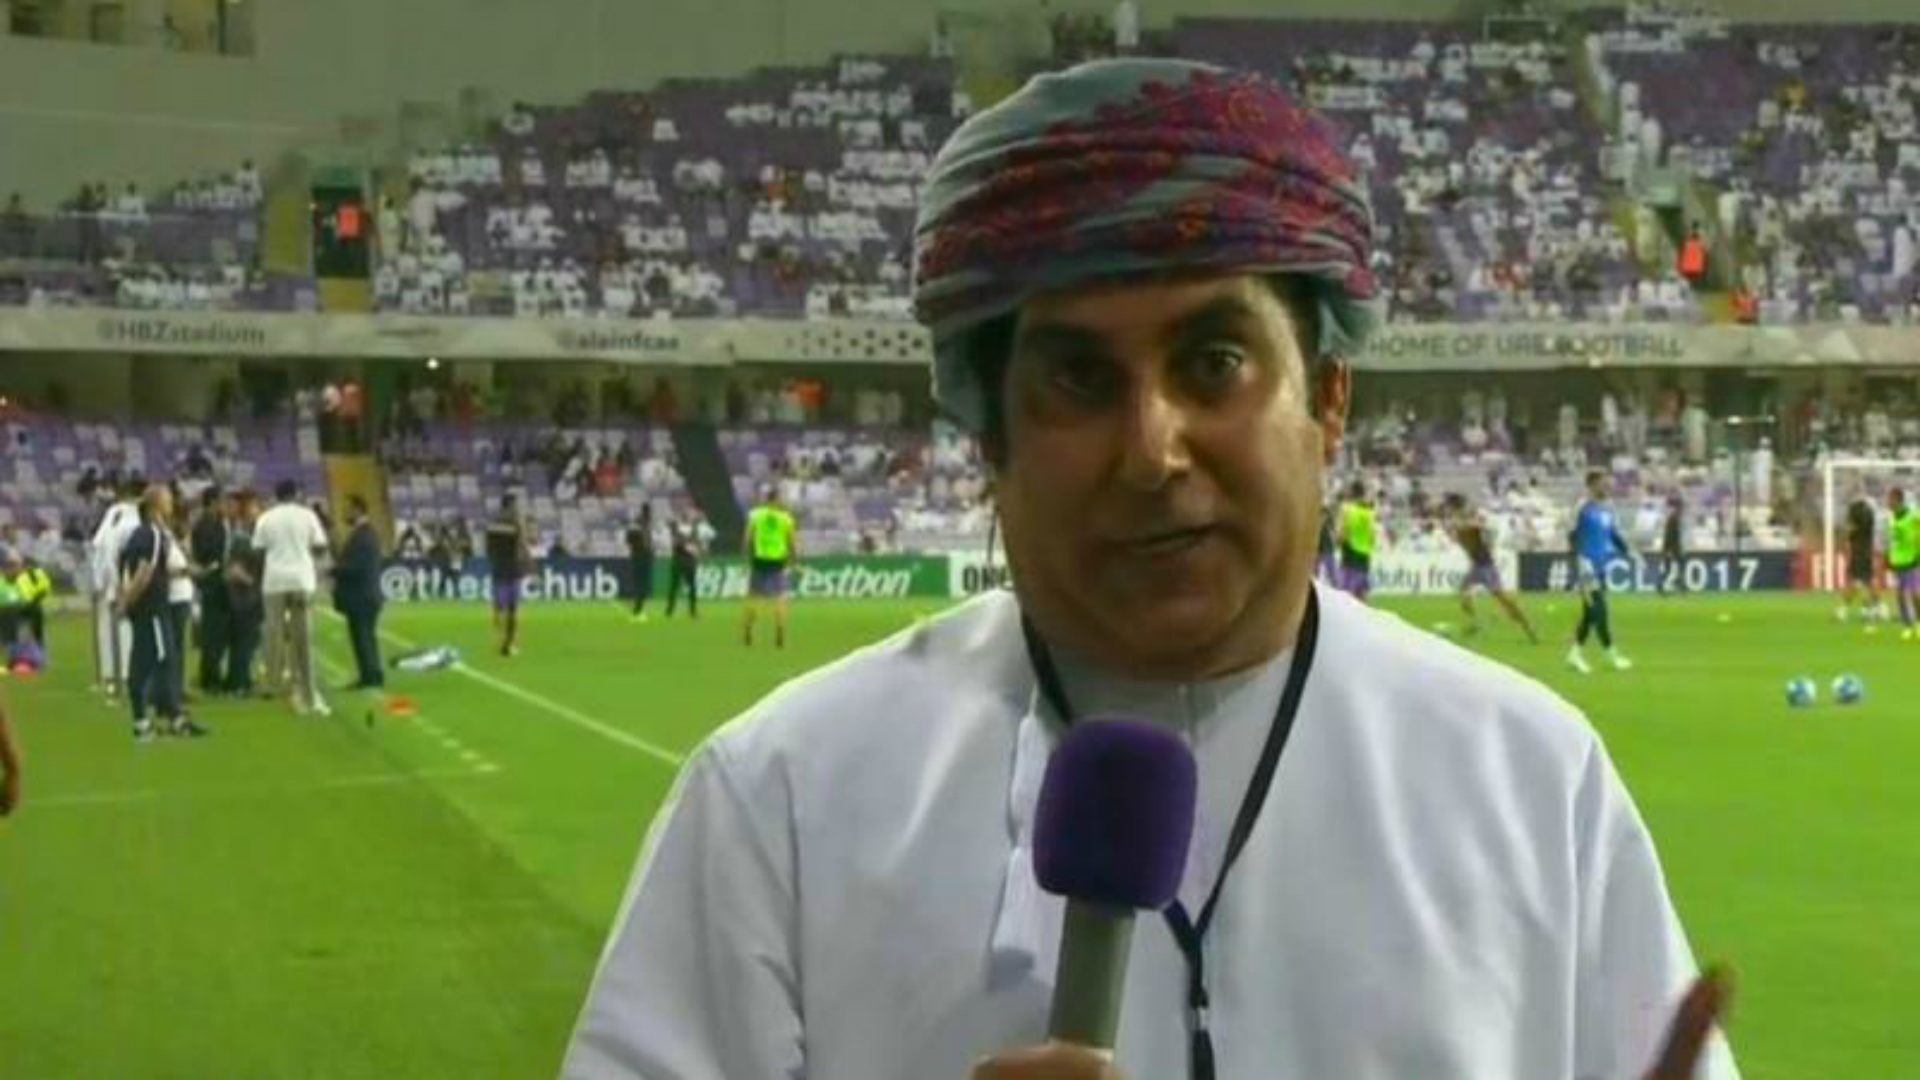 Saudi authorities boot Qatars beIN reporter from WC qualifier